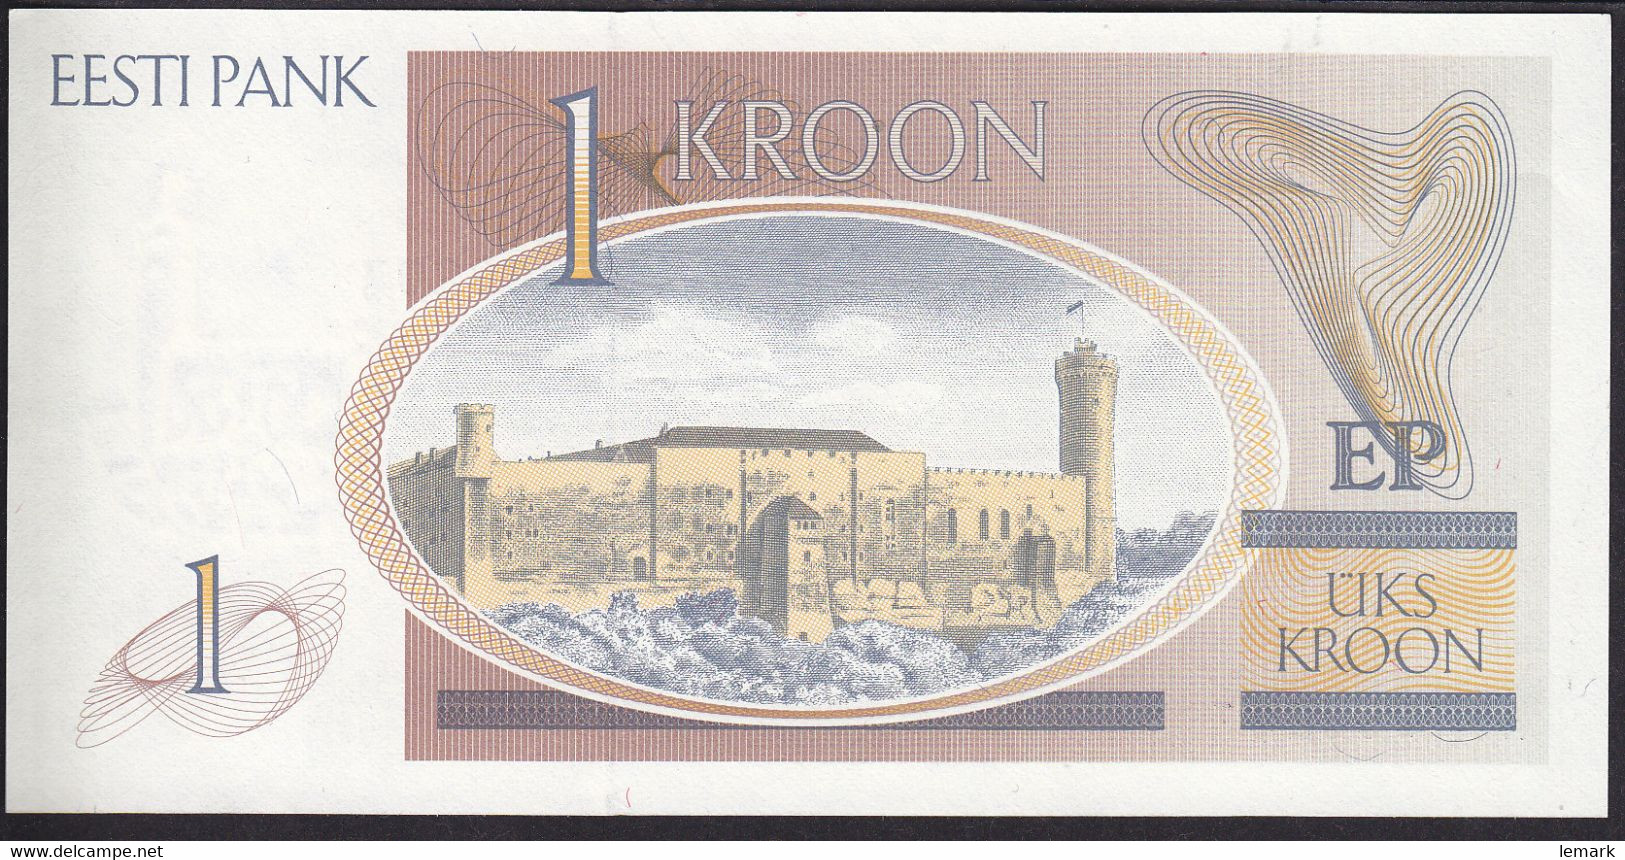 Estonia 1 Krooni 1992 P 69 Prefix AB UNC - Estland